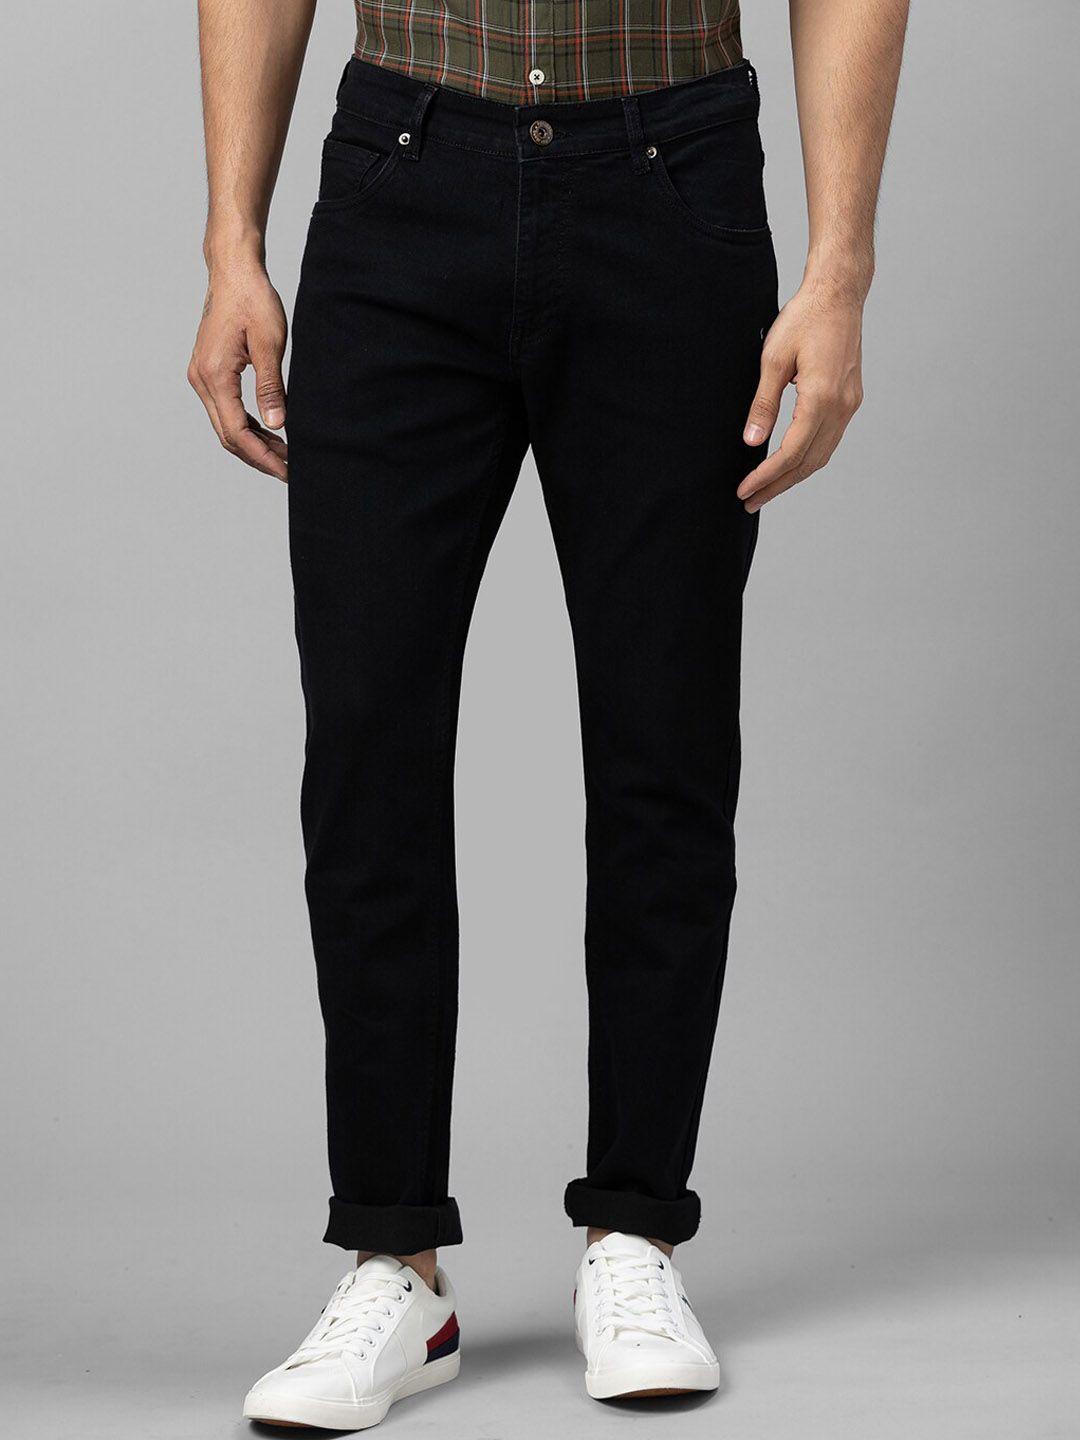 globus-men-black-tapered-fit-stretchable-cotton-jeans